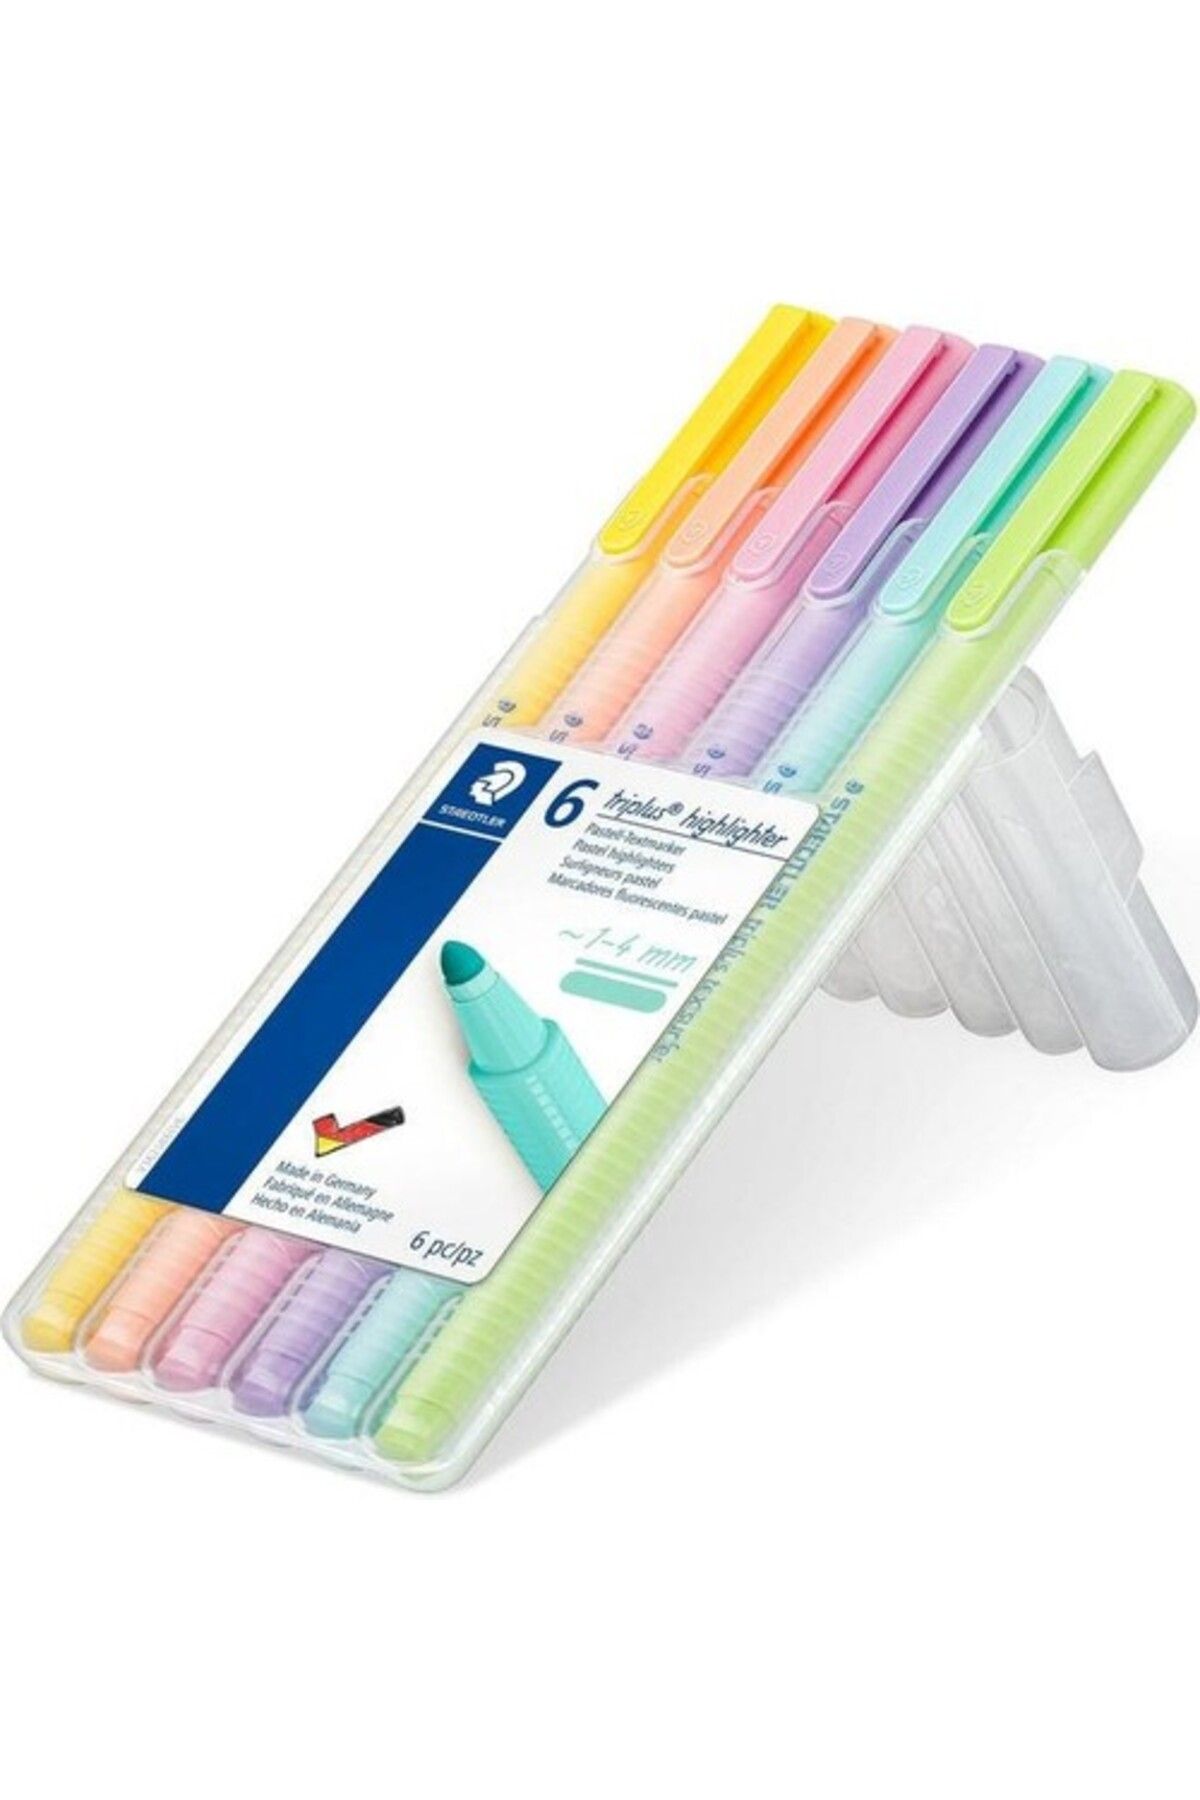 Staedtler Triplus Textsurfer Fosforlu Kalem 6 Pastel Renk Plastik Kutulu Set